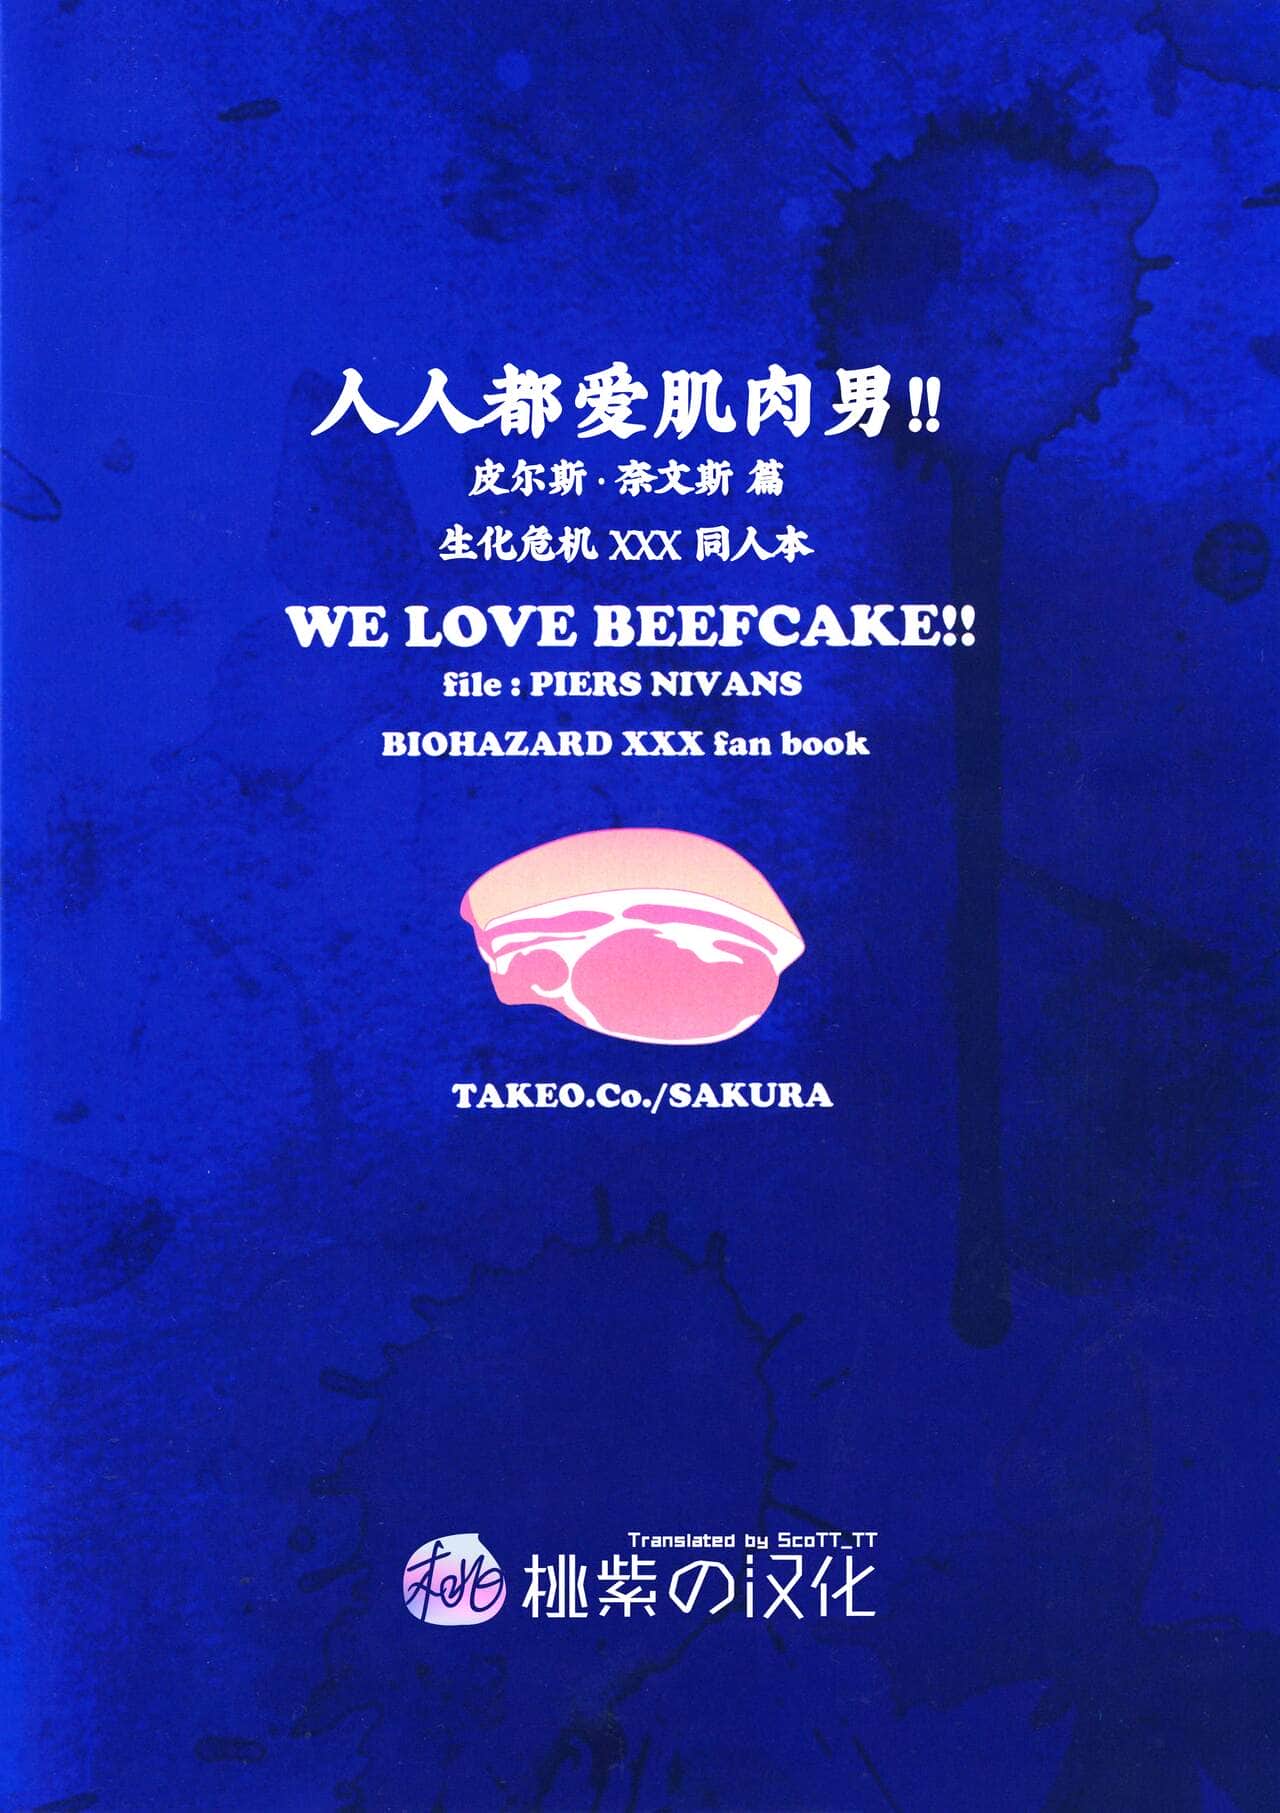 WE LOVE BEEFCAKE!! file:PIERS NIVANS (Resident Evil)｜人人都爱肌肉男!!皮尔斯篇(生化危机) - Foto 32